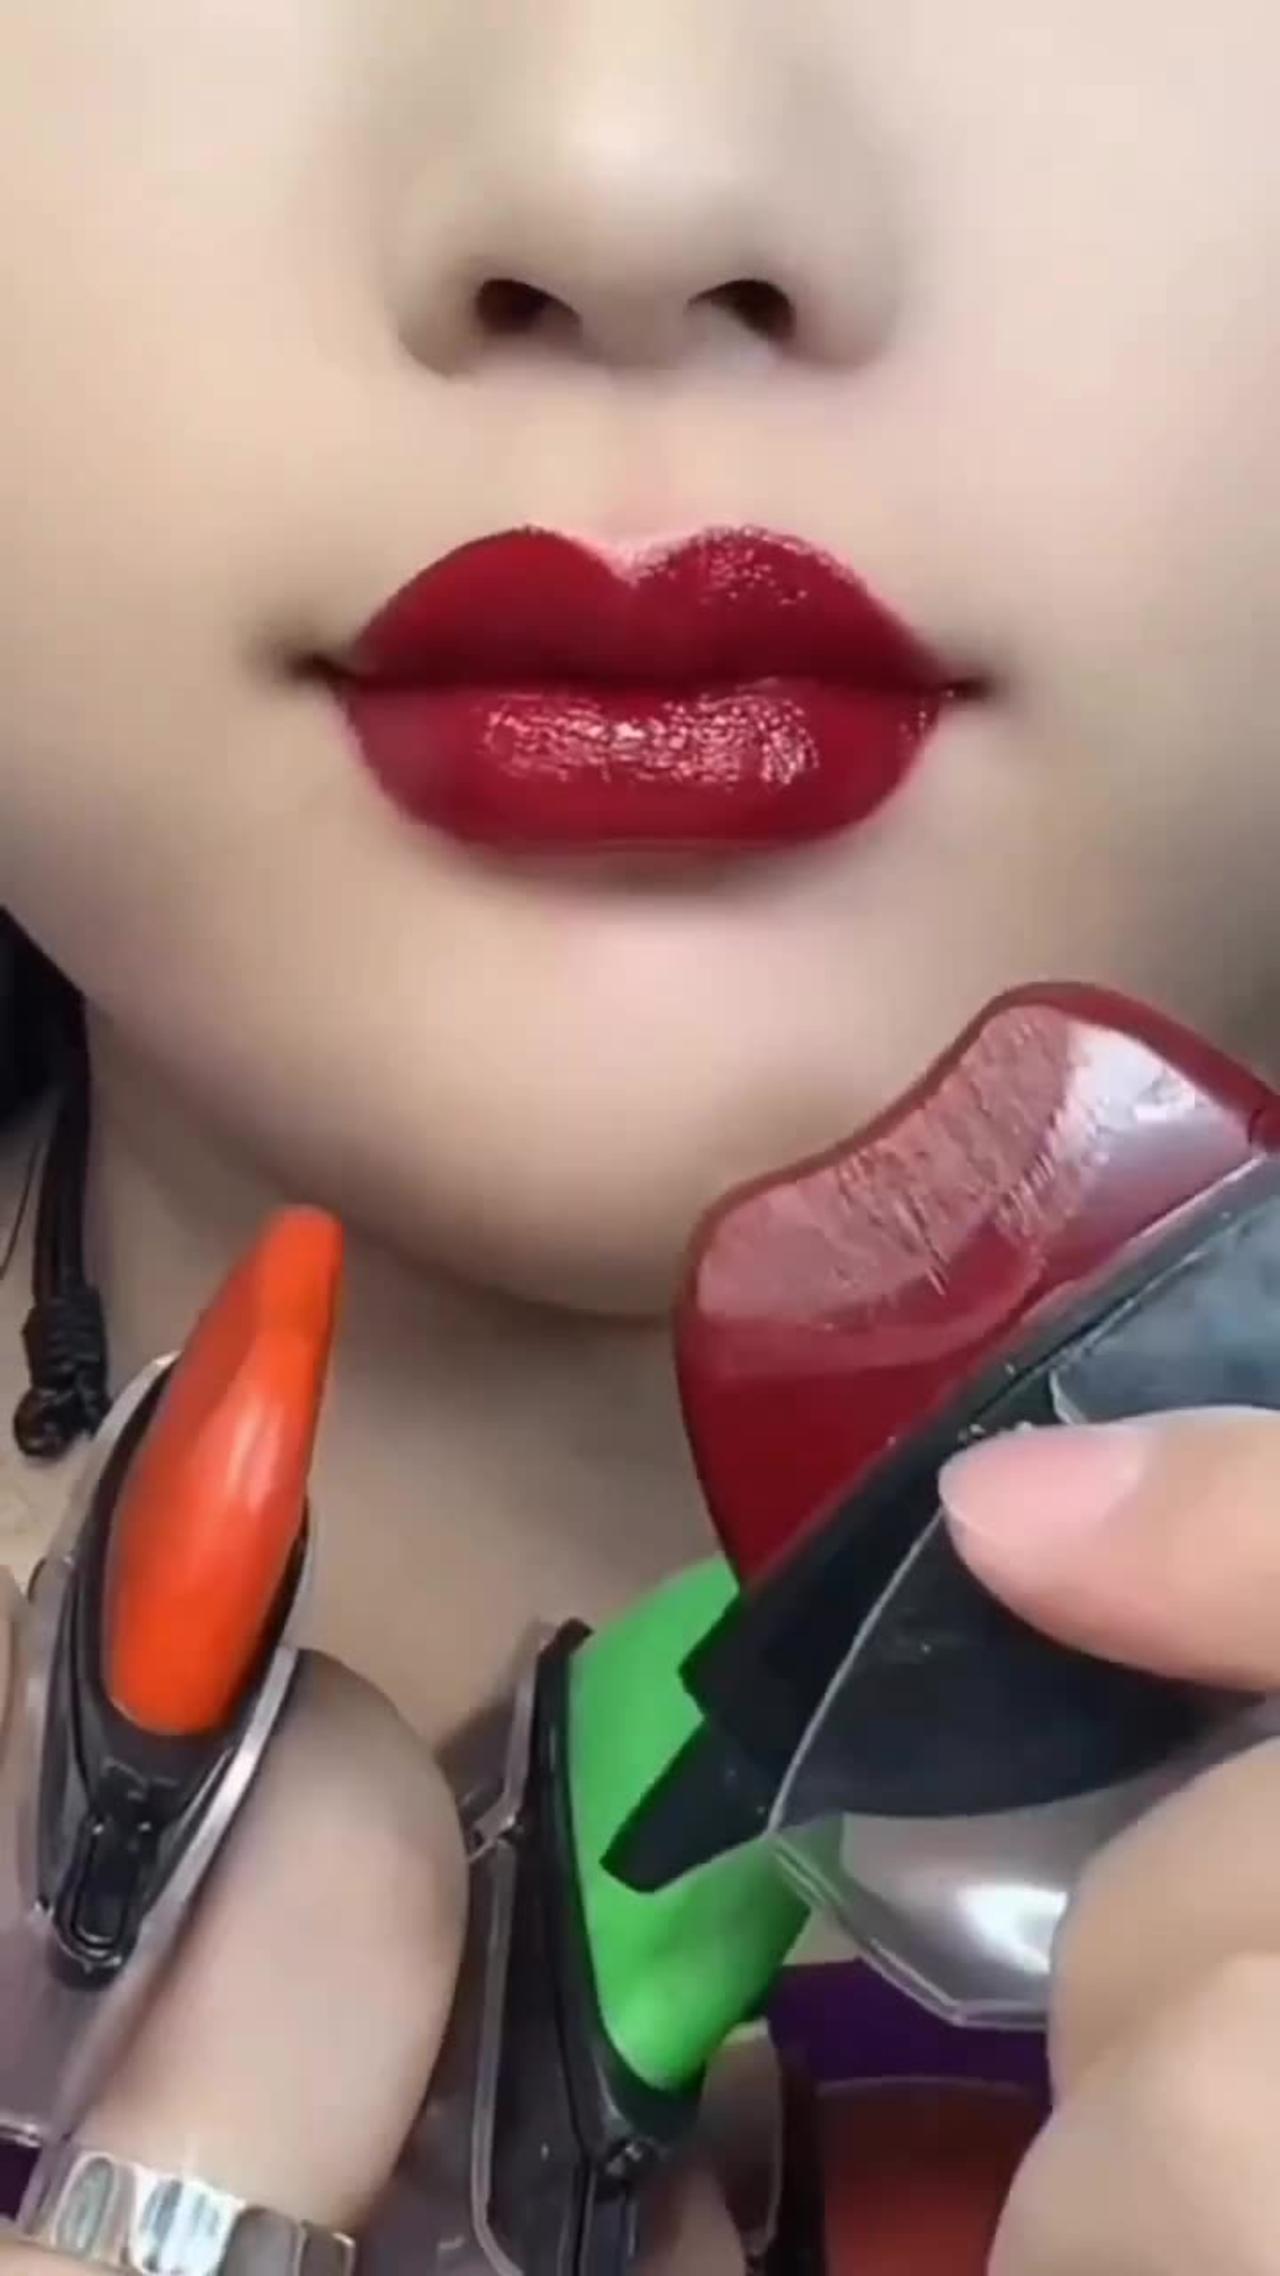 Lipstick lip shape